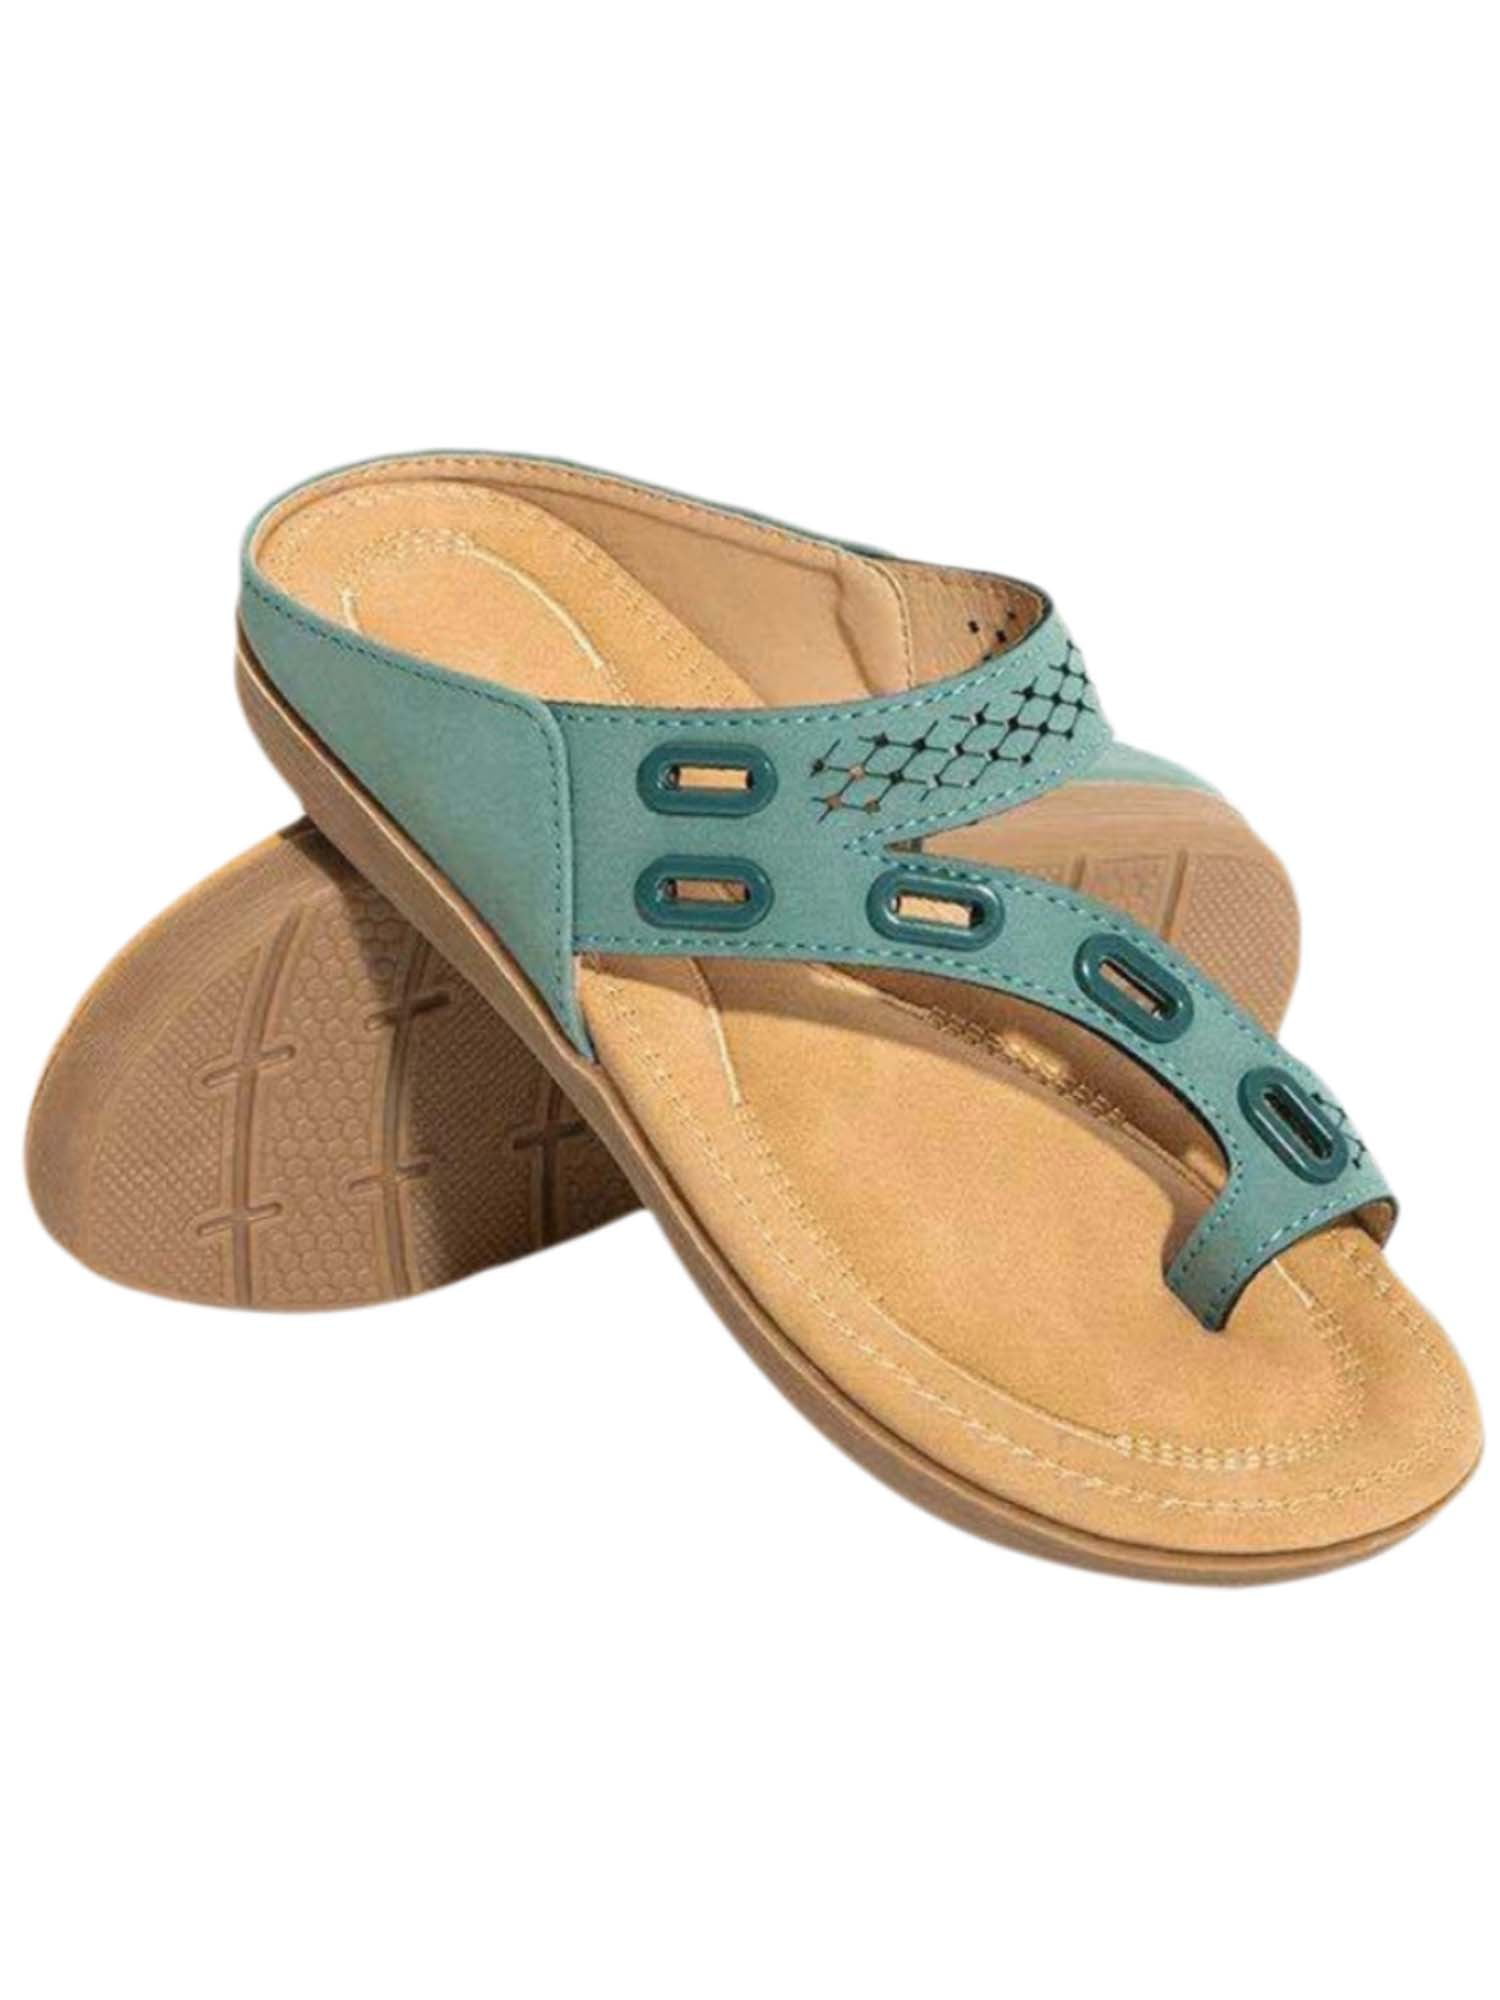 Women Summer Orthopedic Comfy Slippers Flat Flip Flops Beach Sliders Shoes Size 